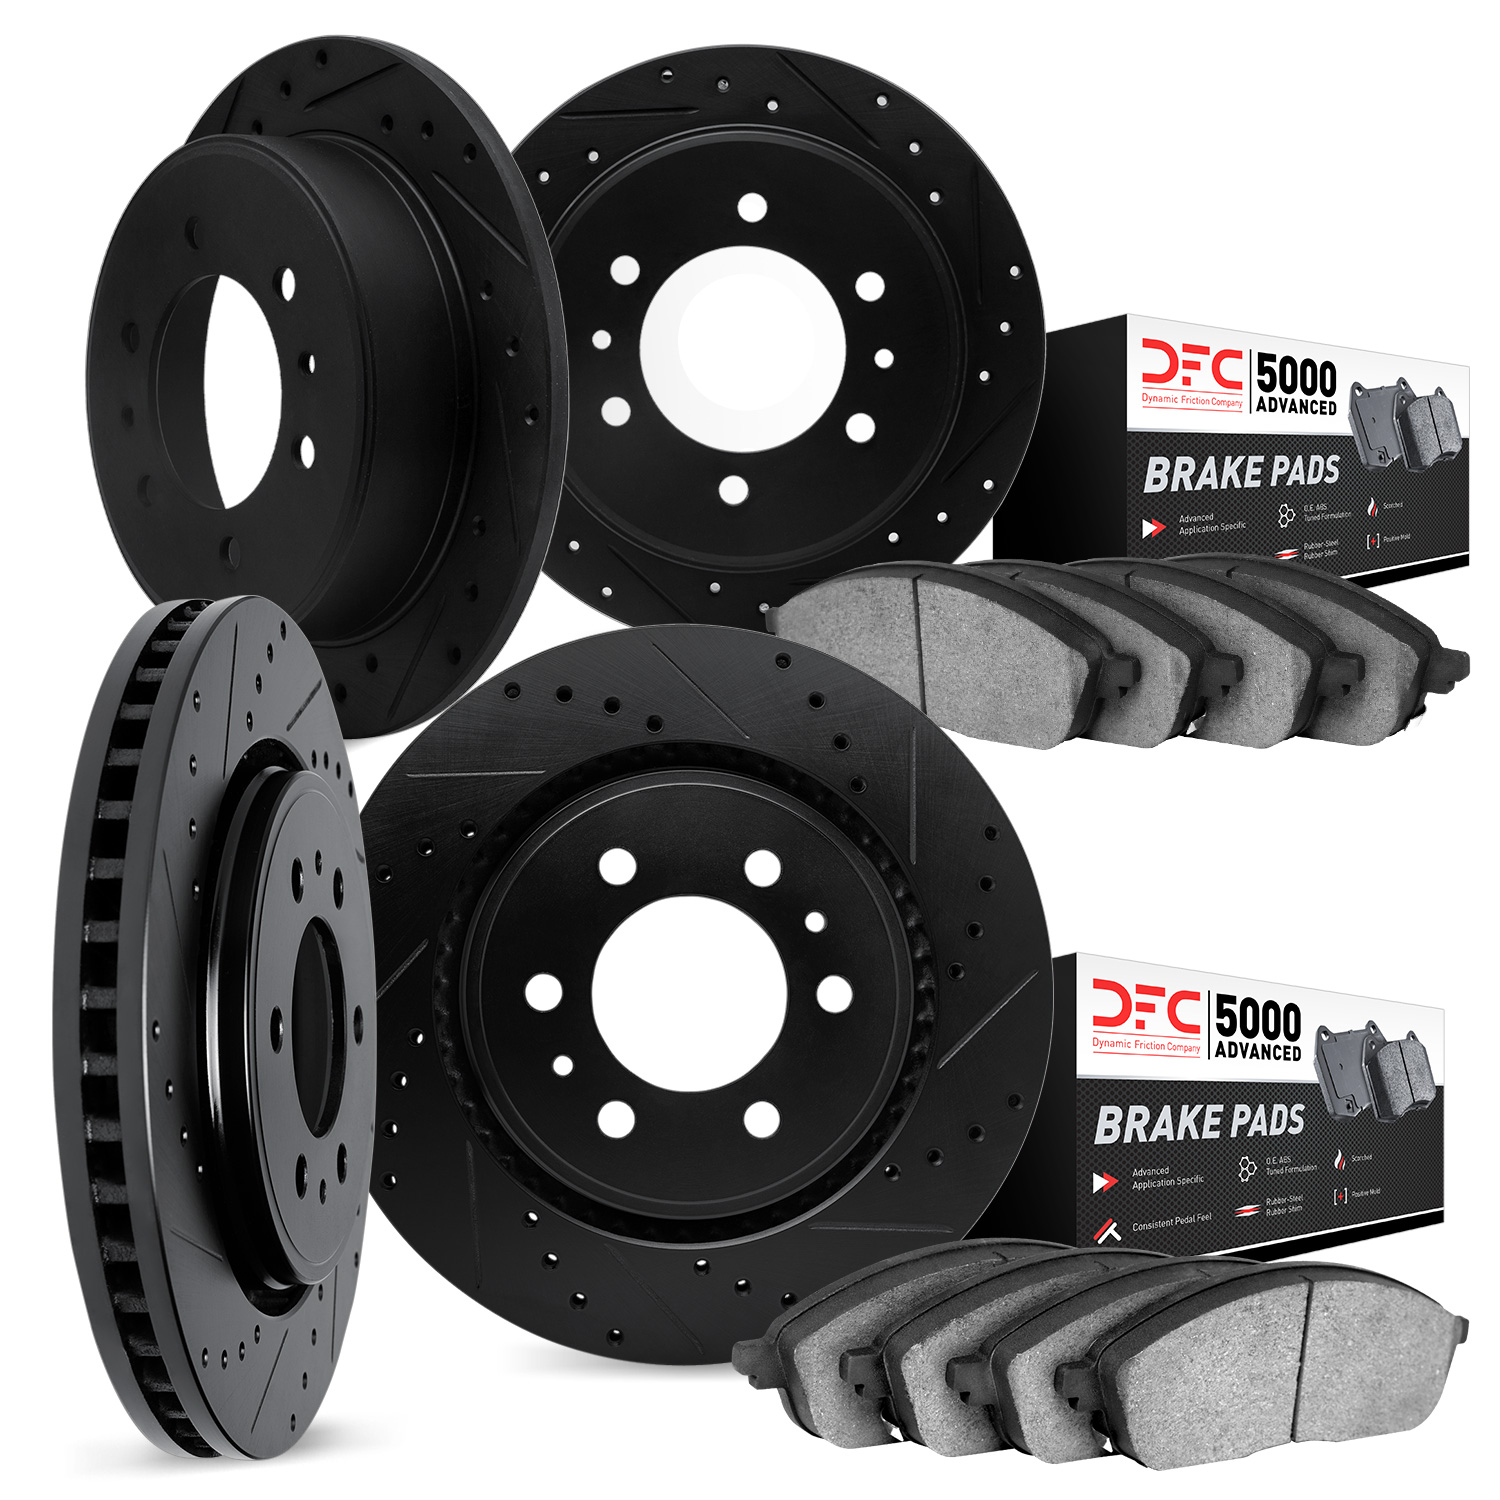 8504-40231 Drilled/Slotted Brake Rotors w/5000 Advanced Brake Pads Kit [Black], 2007-2017 Multiple Makes/Models, Position: Front